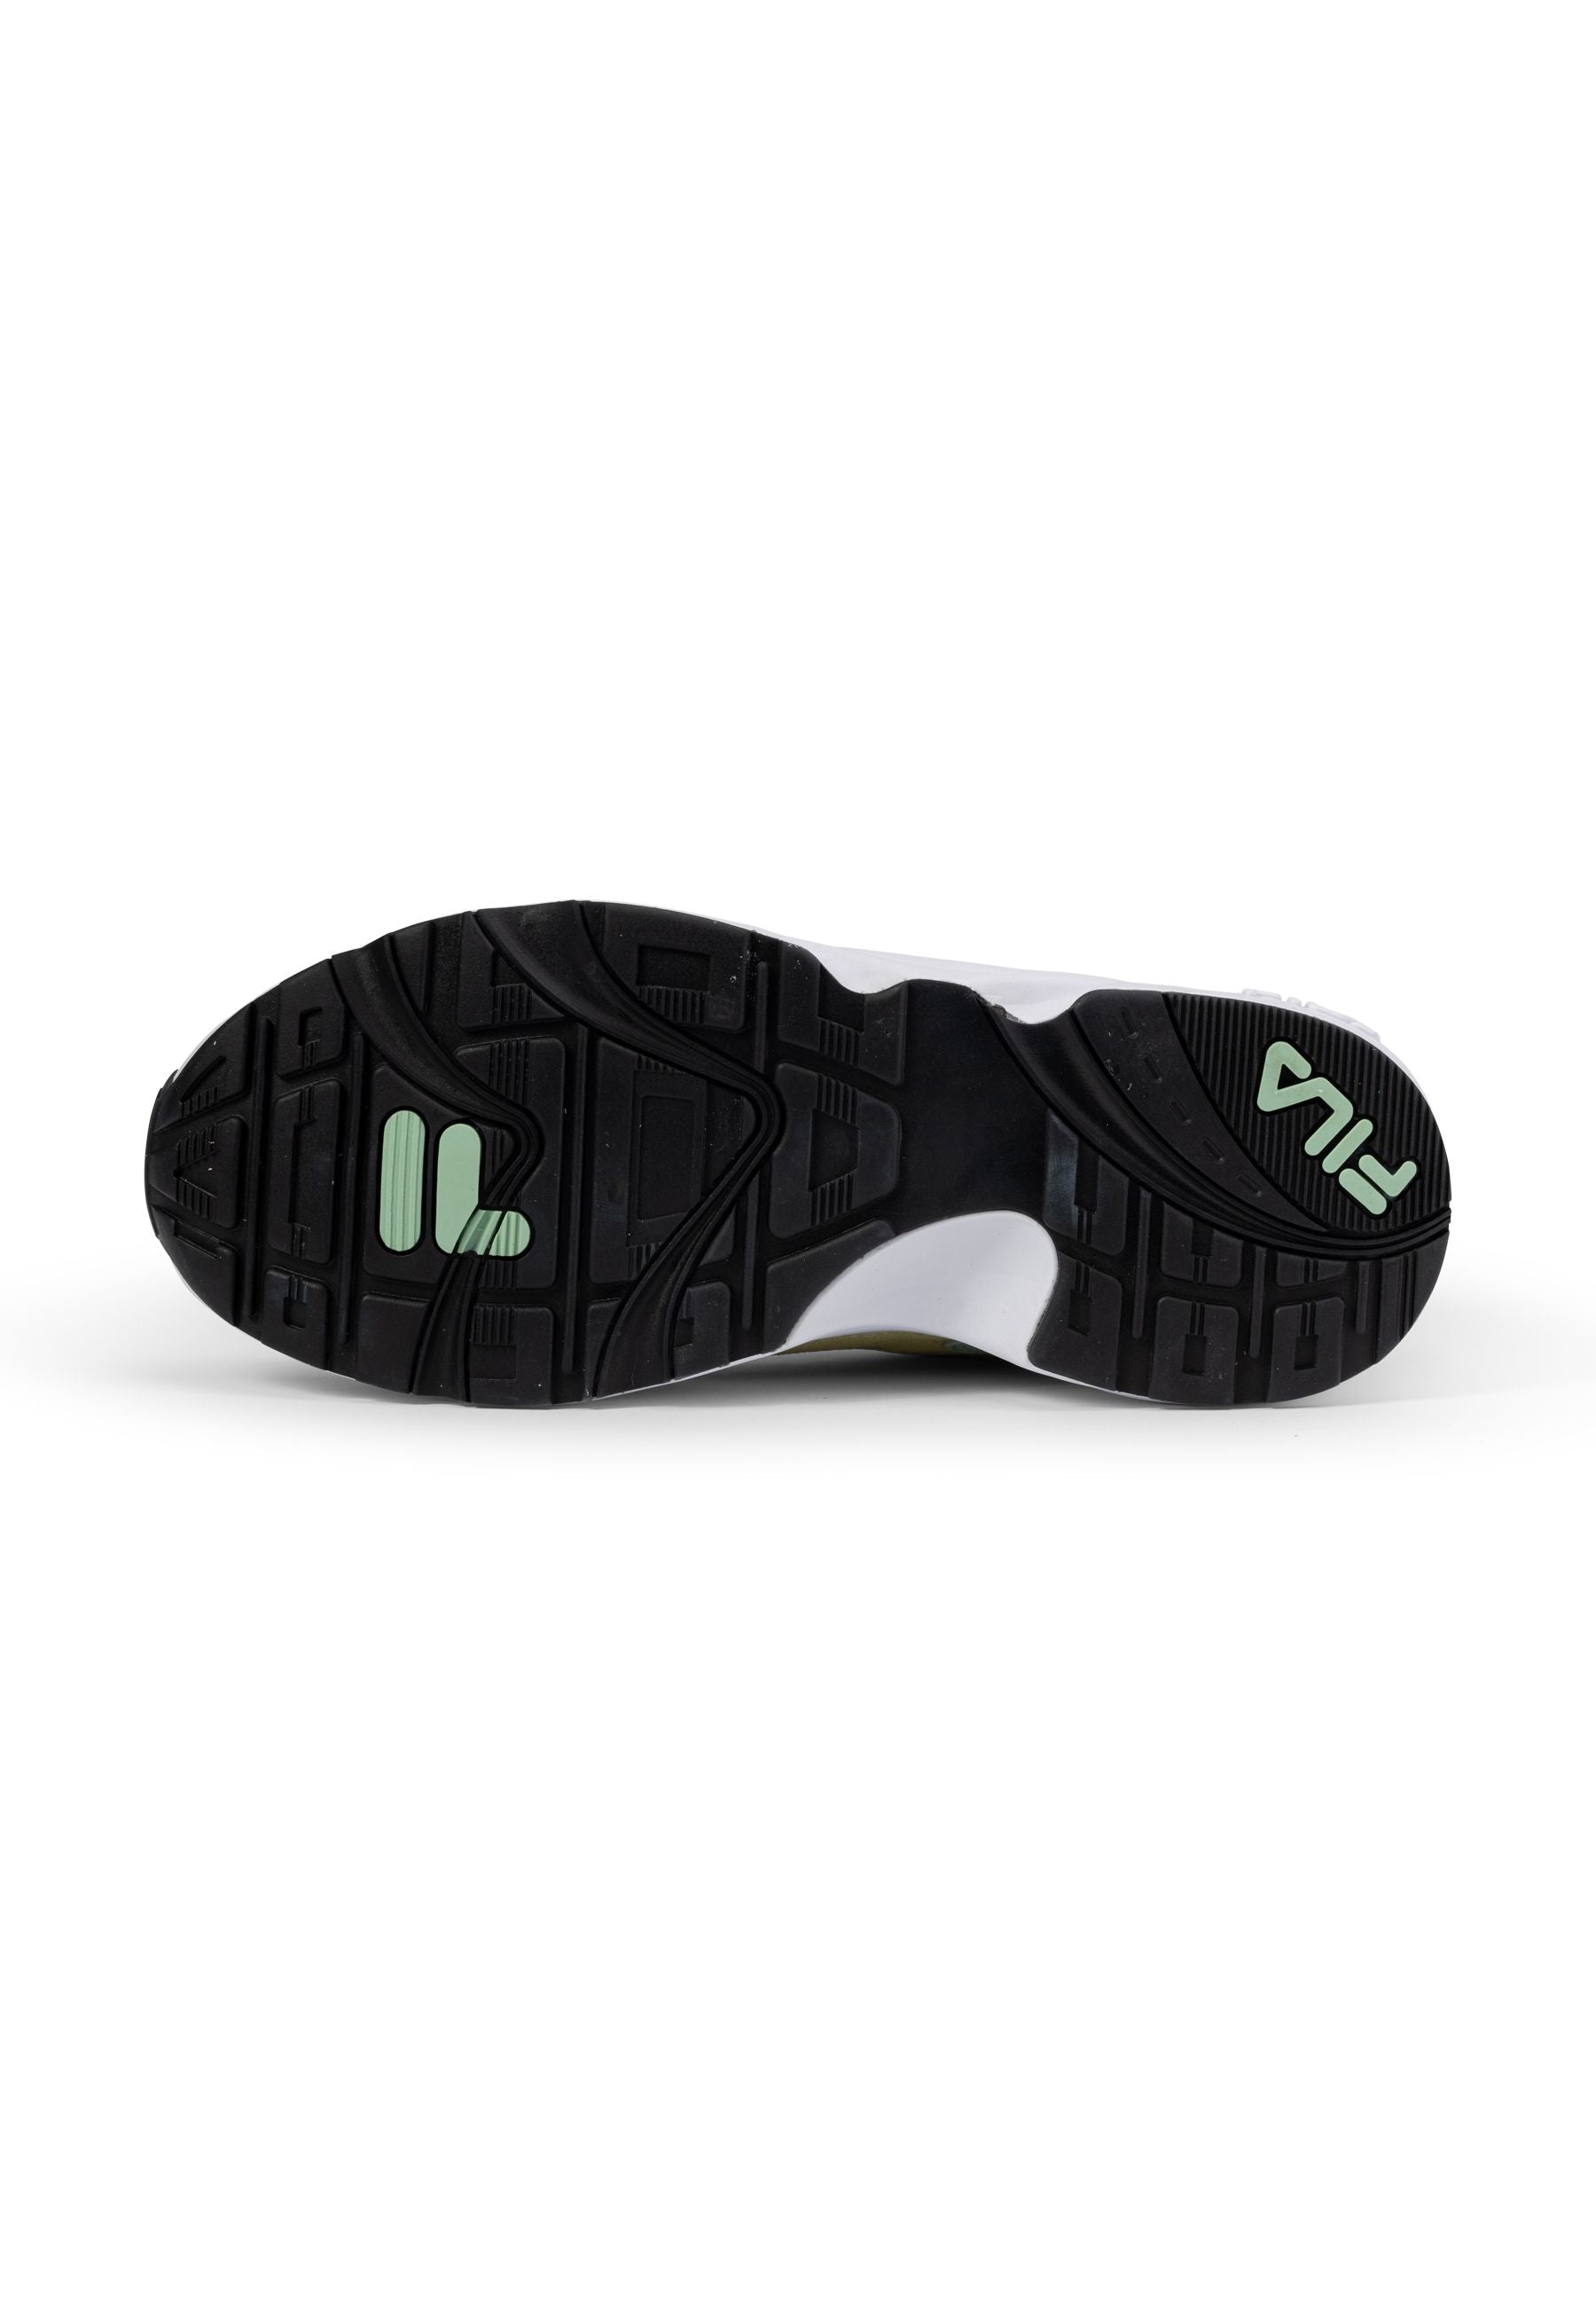 V94M Wmn in White-Smoke Green Sneakers Fila   